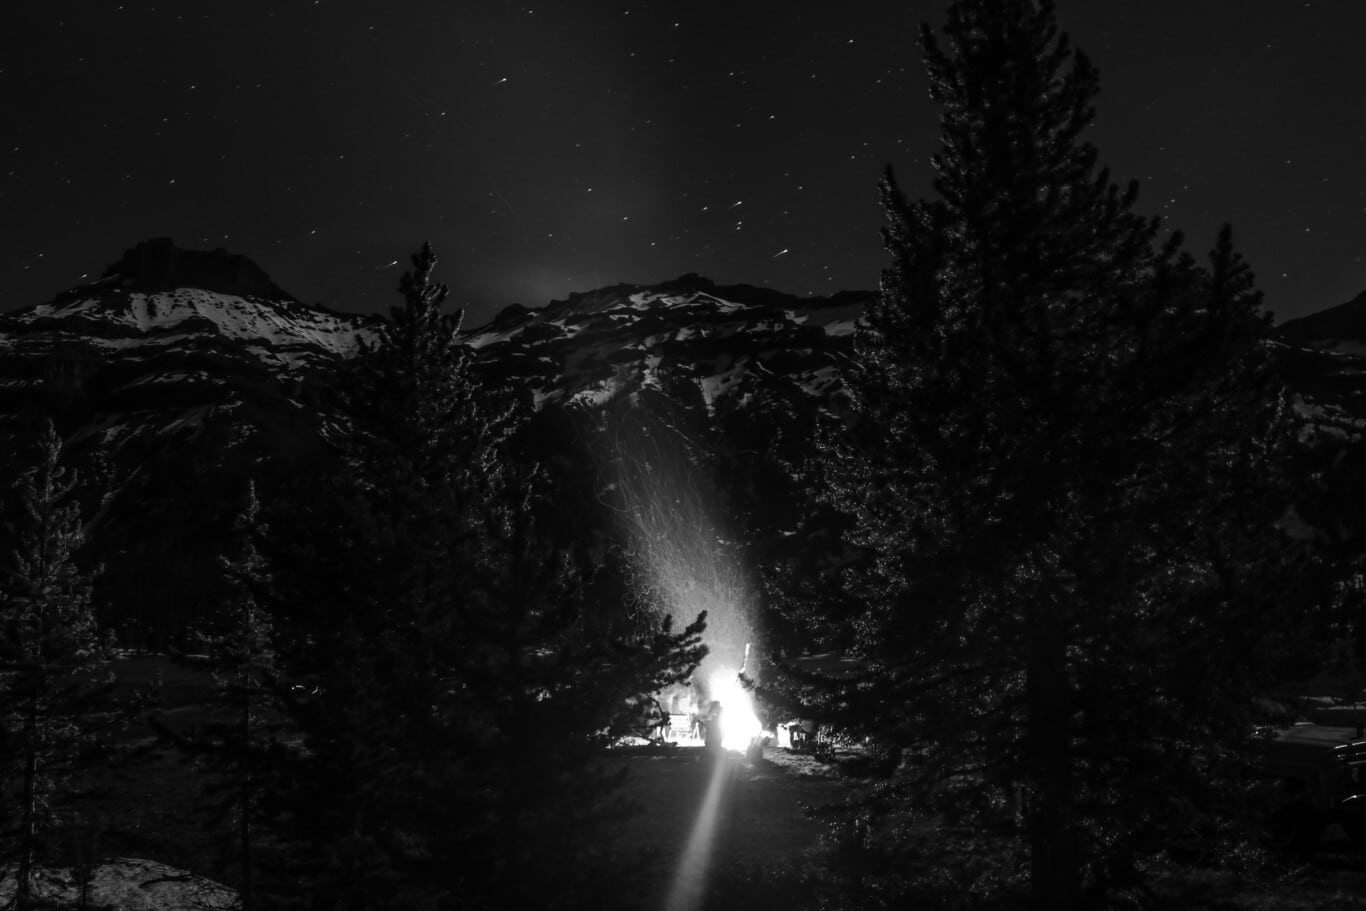 Mountain Campfire by Landon Blanchard